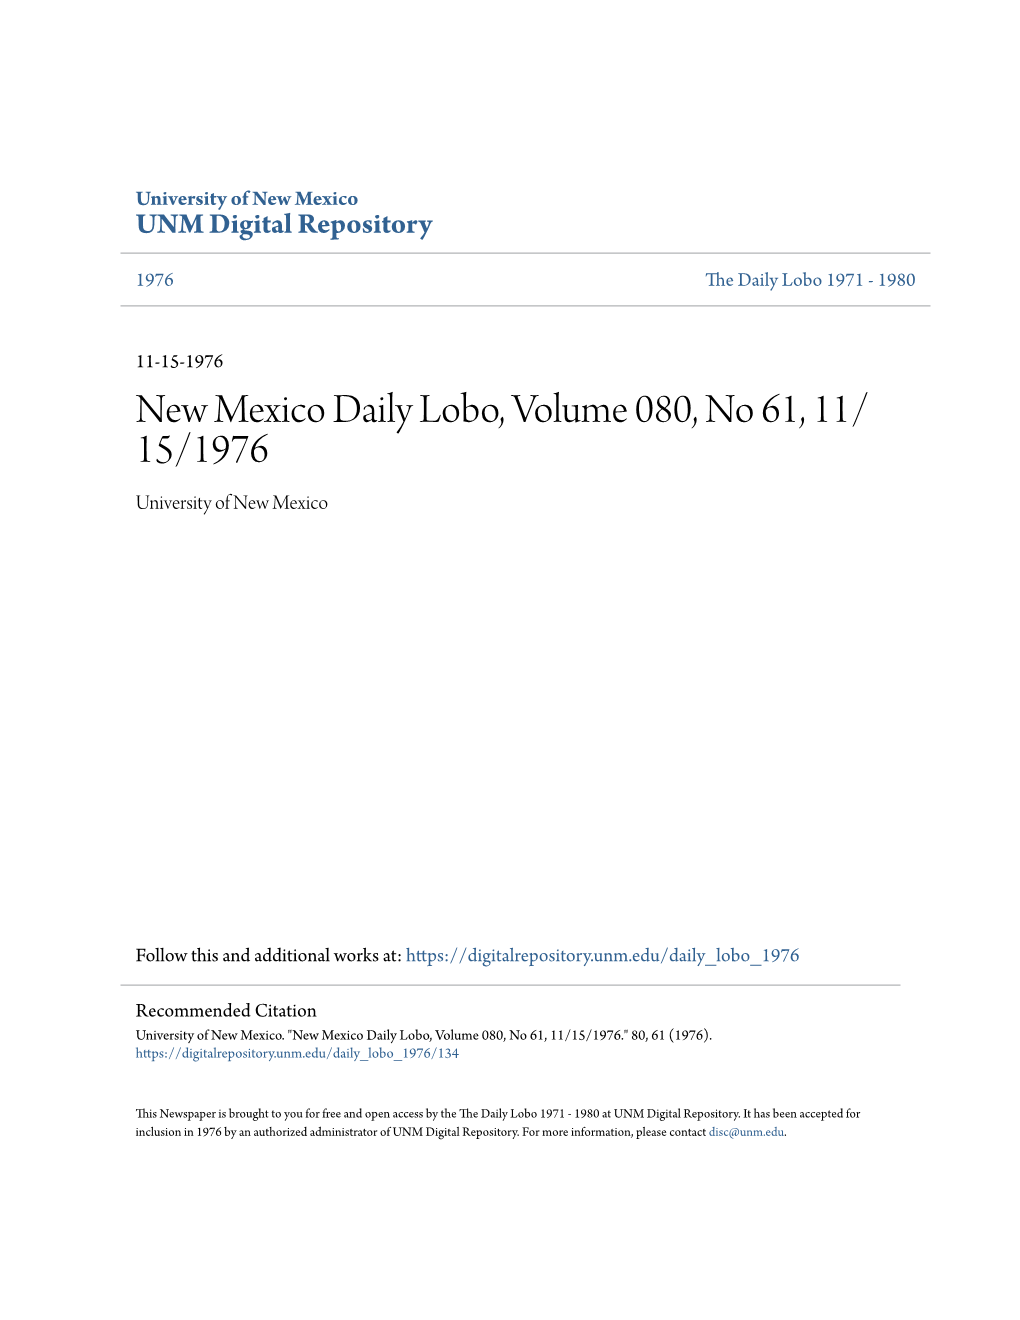 New Mexico Daily Lobo, Volume 080, No 61, 11/15/1976." 80, 61 (1976)